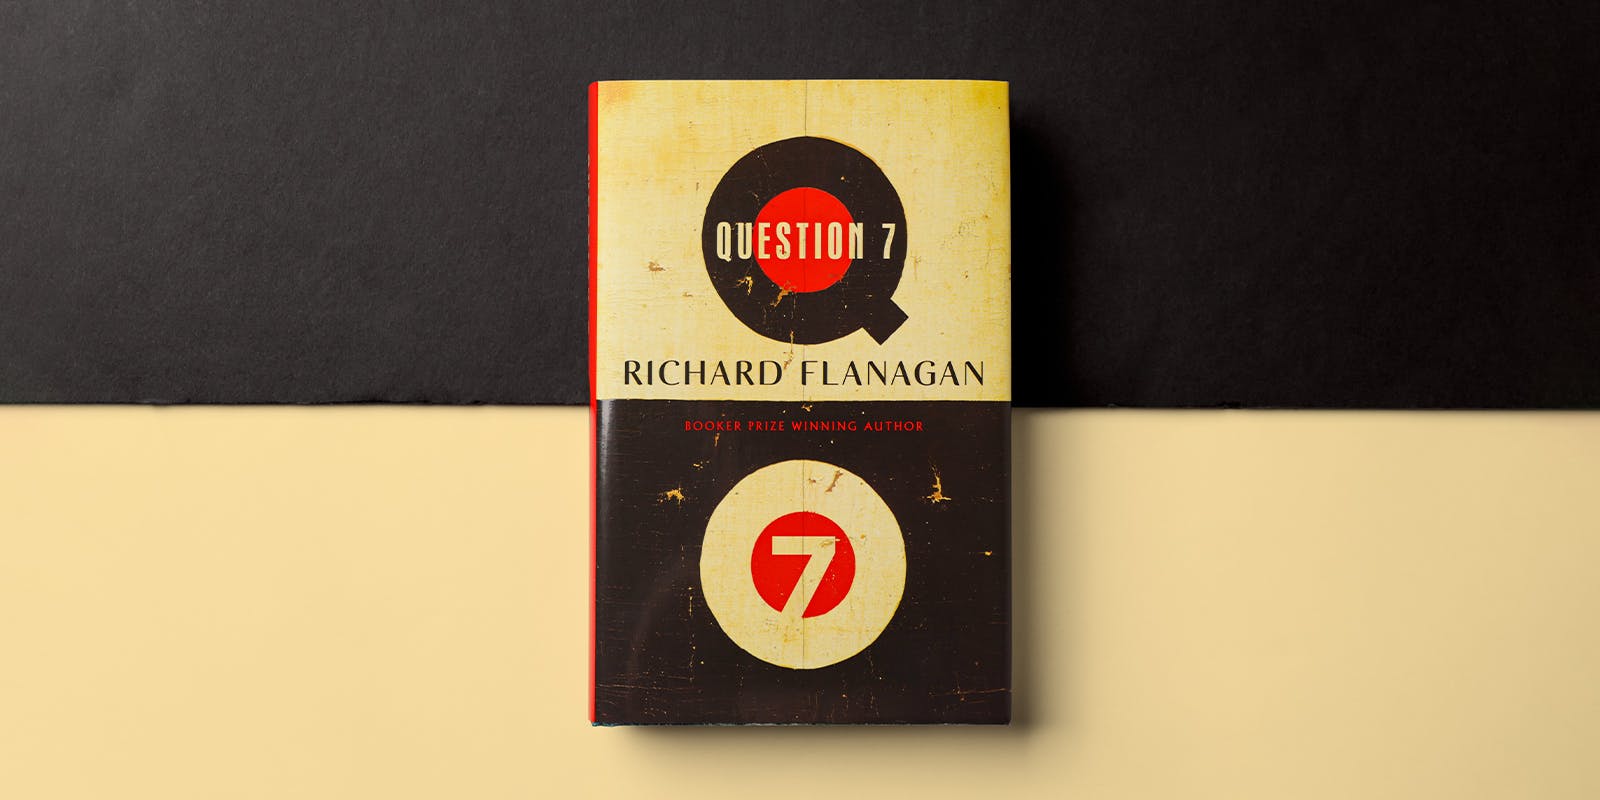 Richard Flanagan shares how dreams inspired his new book